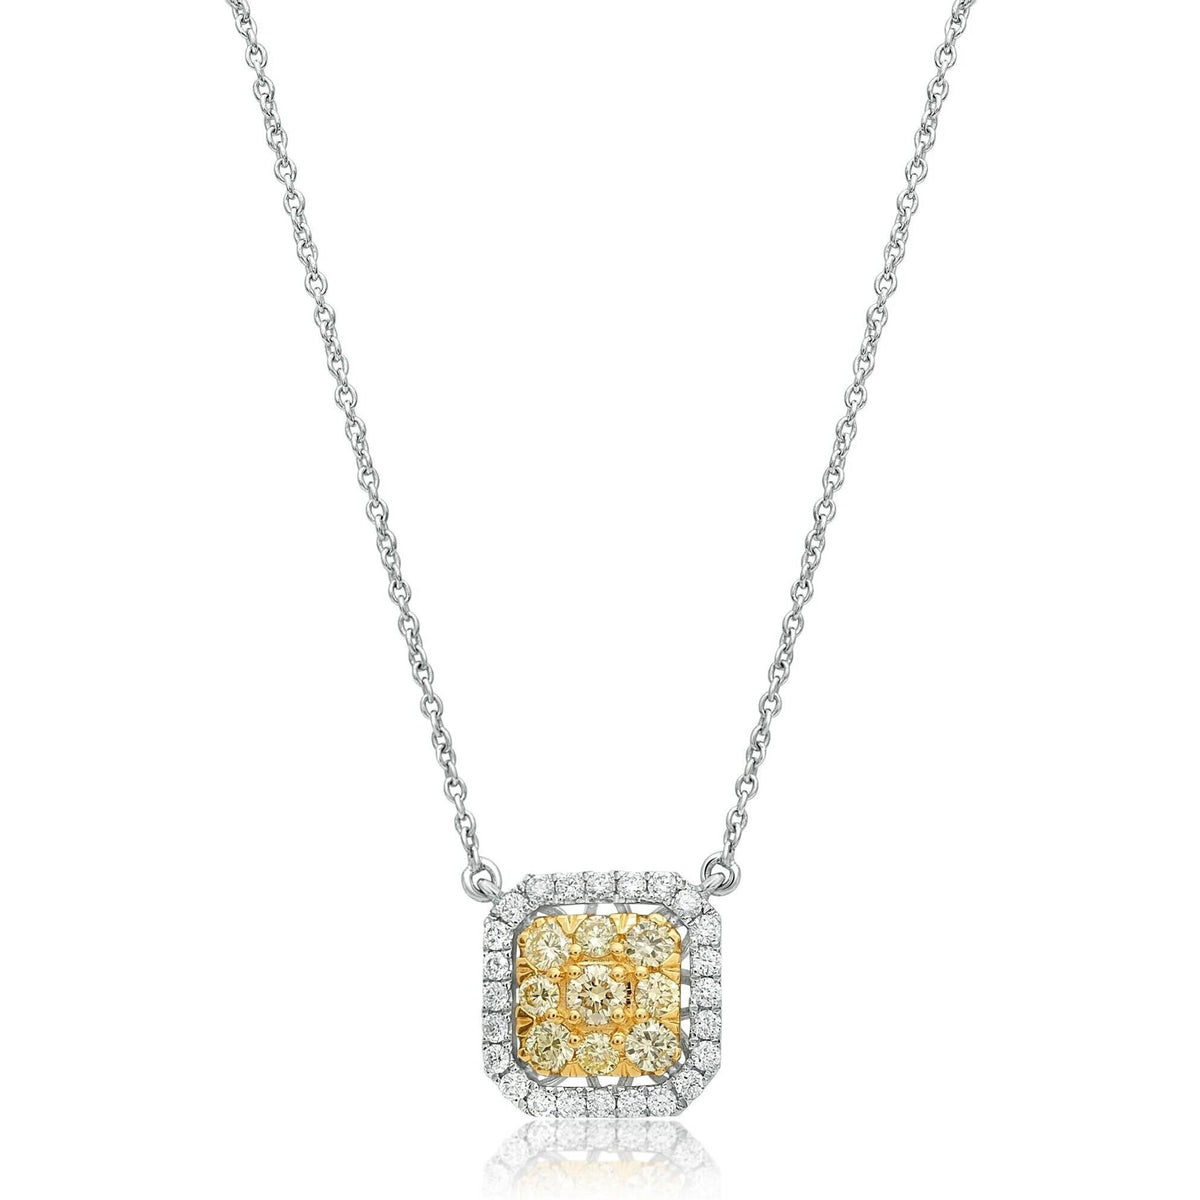 Roman & Jules Two Tone 18K Gold Diamond Cluster Necklace - 0.69 Carat Total Diamond Weight